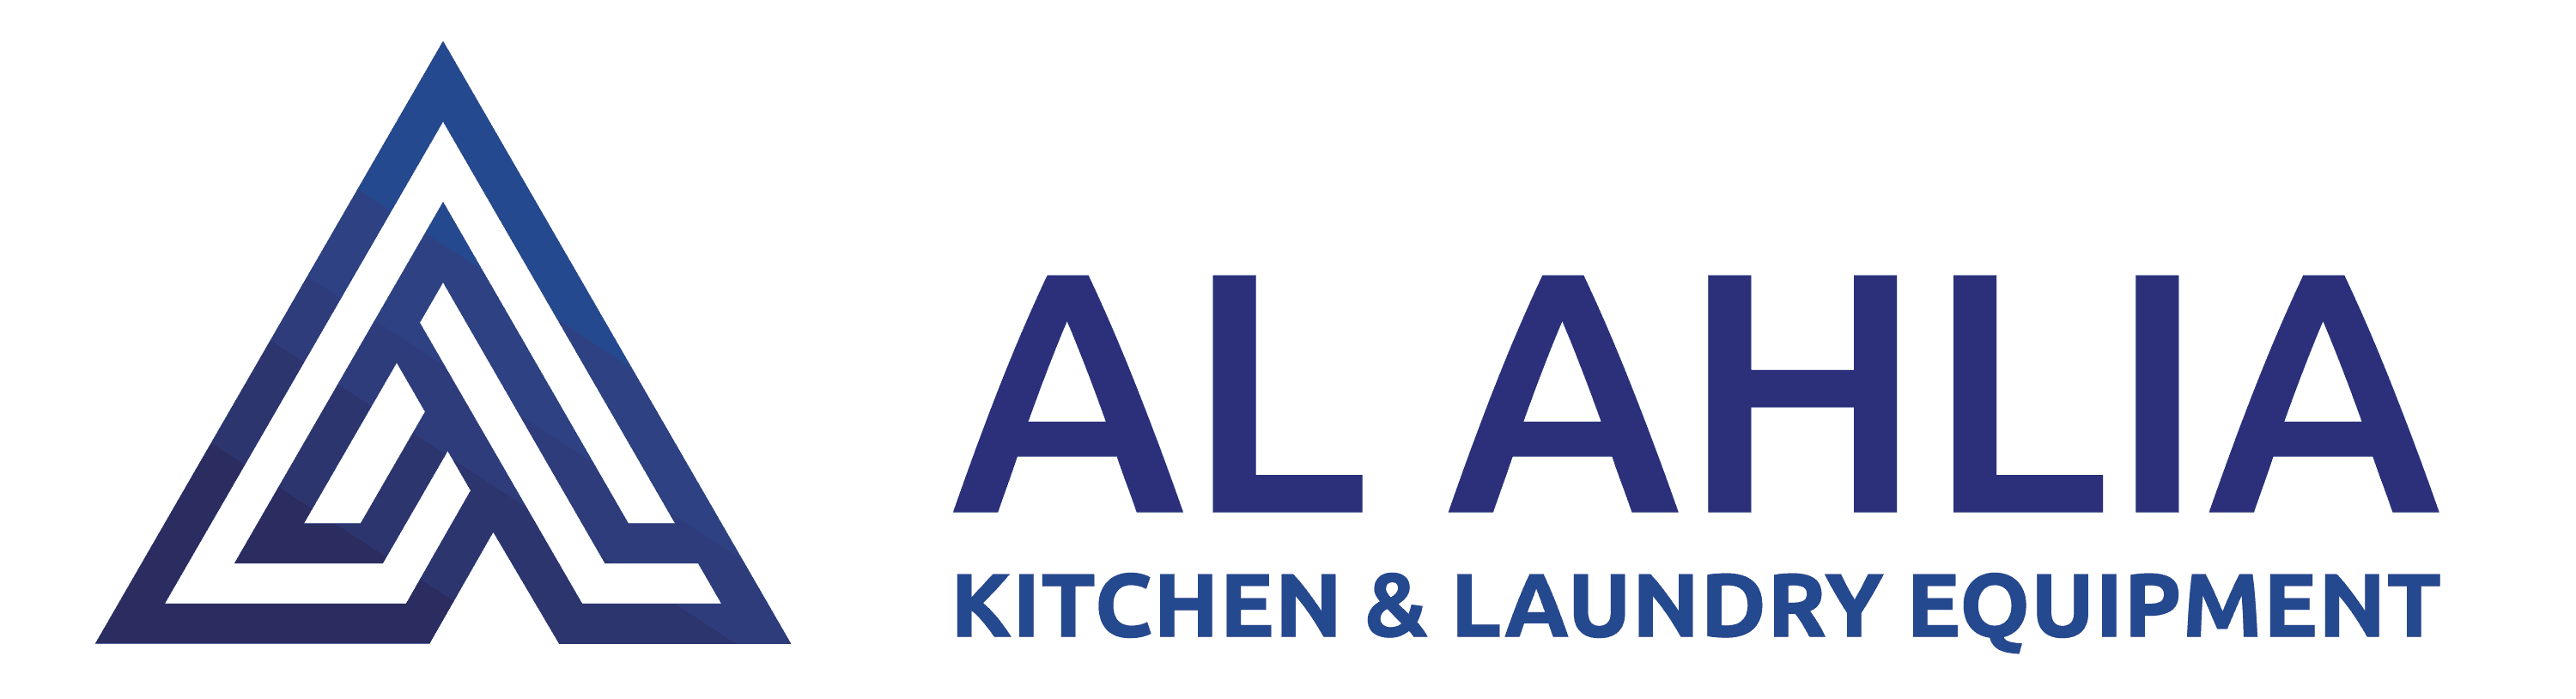 Kitchen & Laundry Equipment